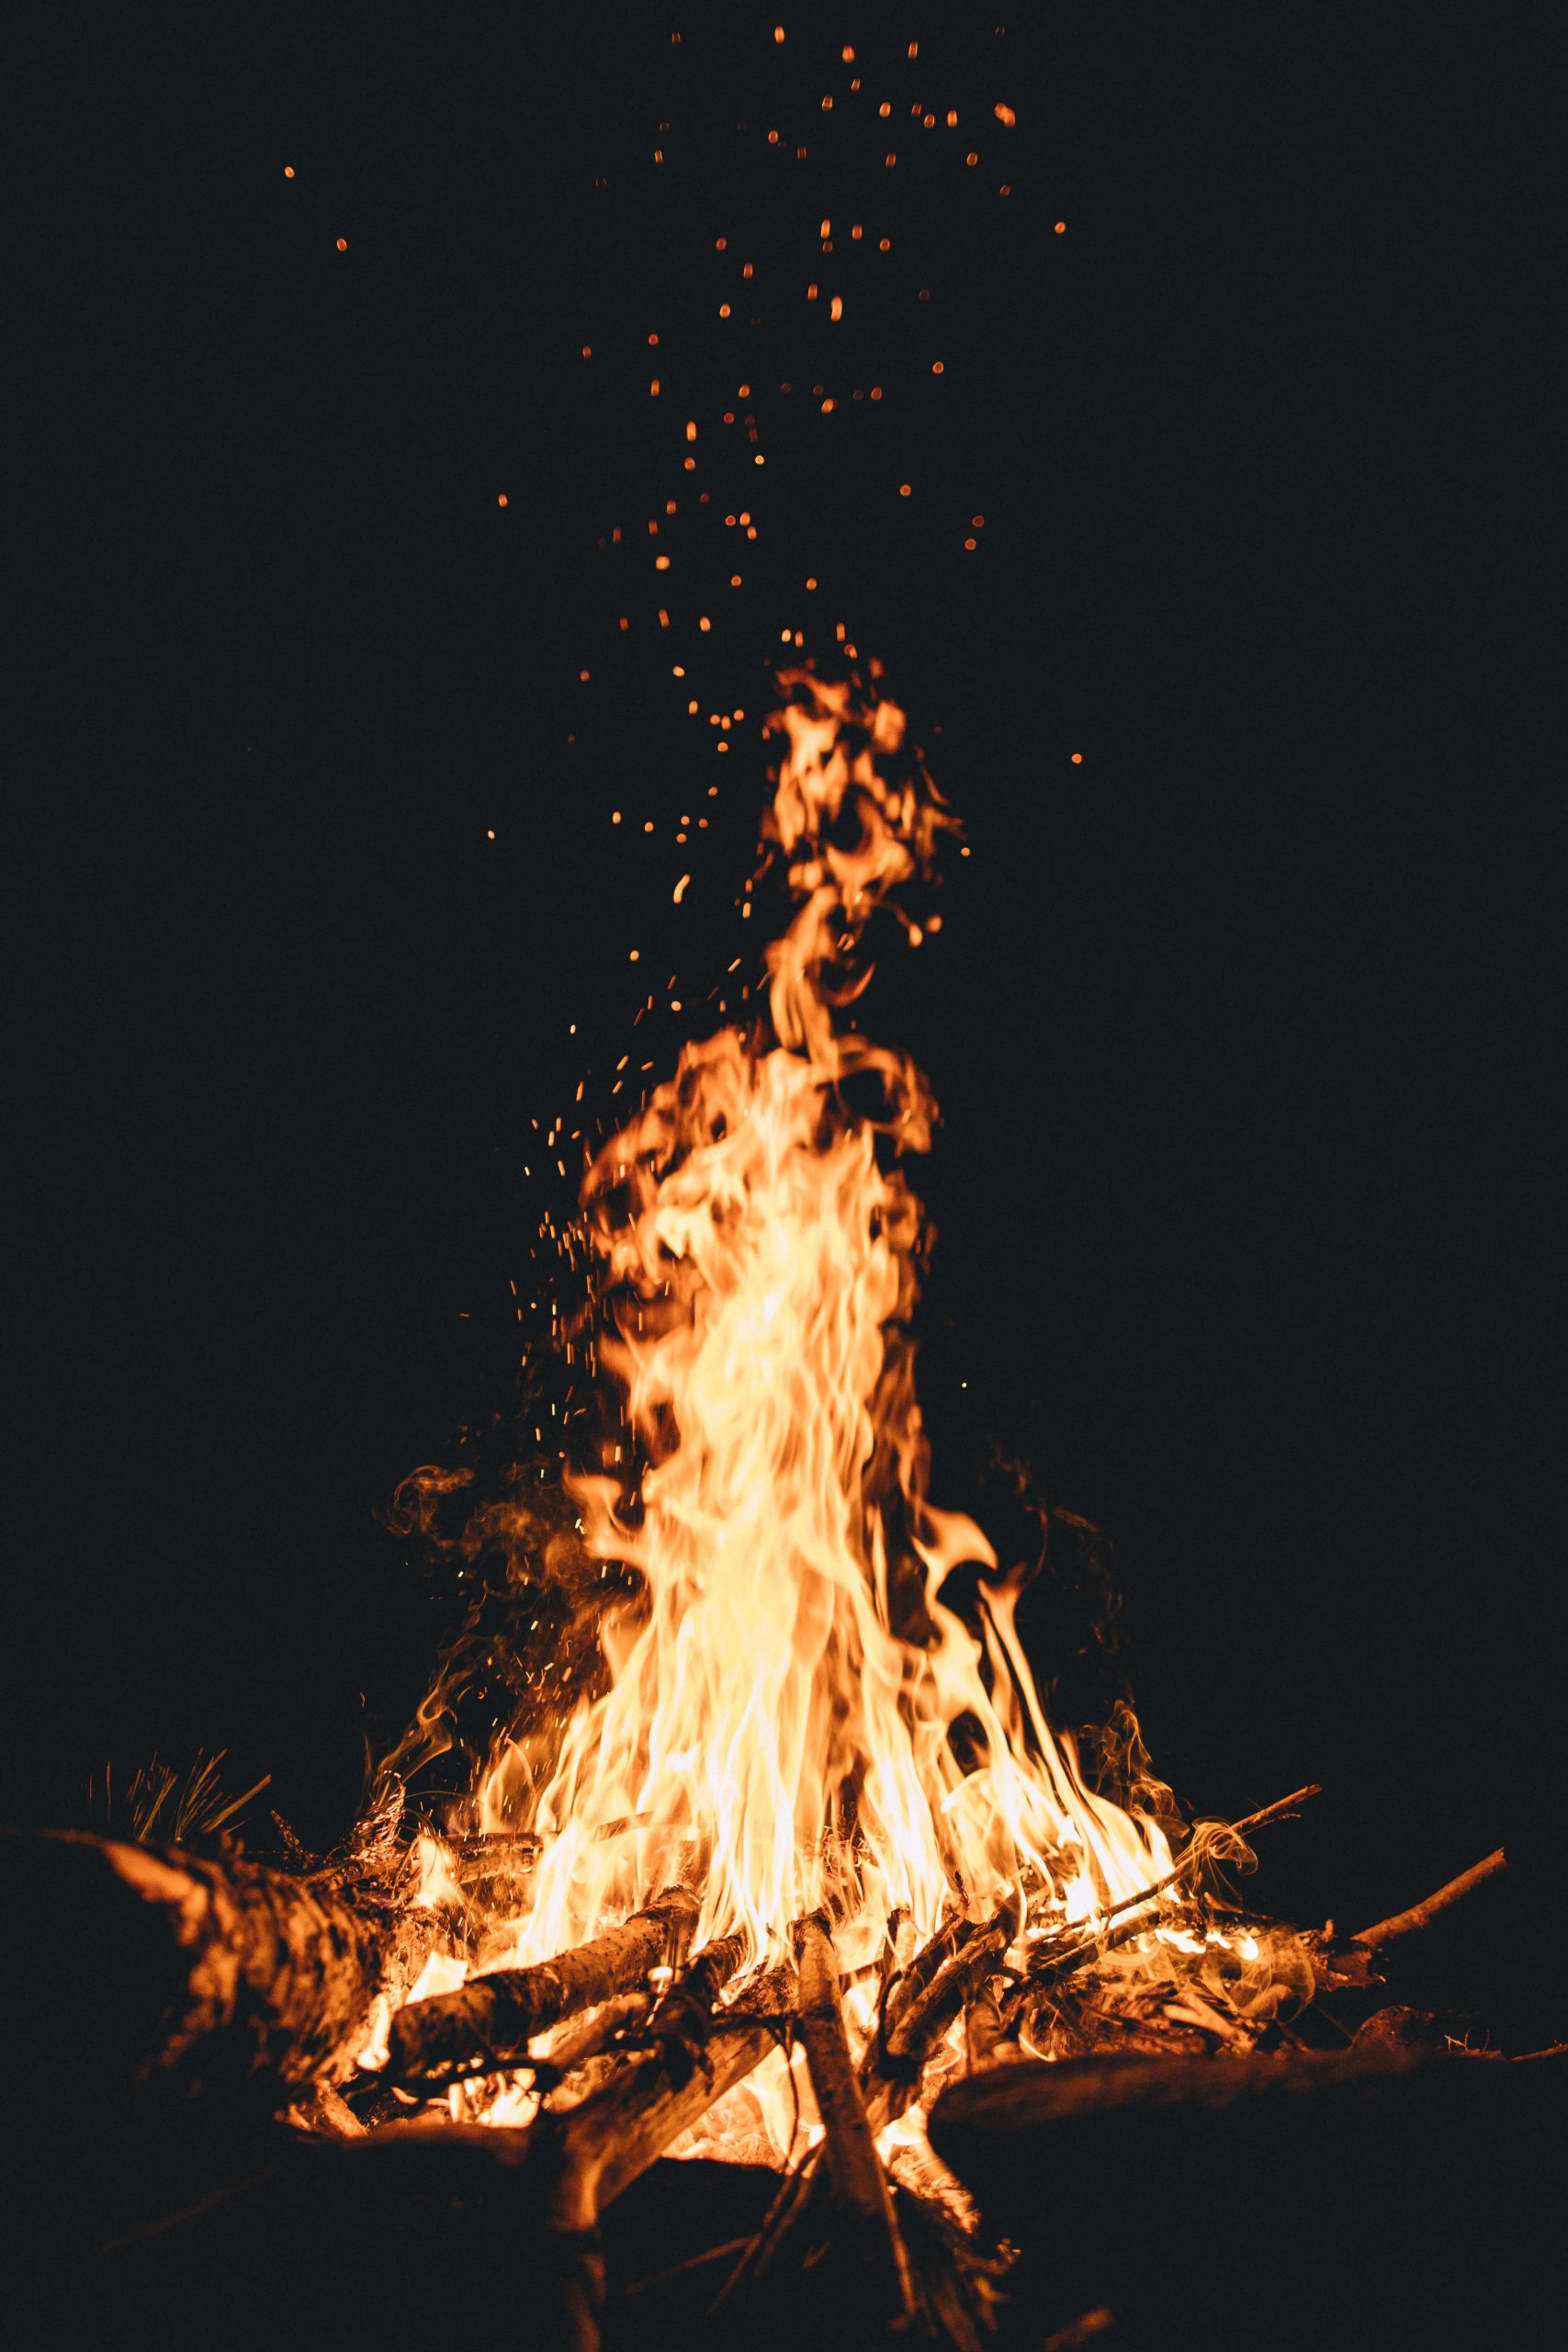 Lagerfeuer, Bonfire, Artikel Bild : Jahreskreisfest Yule, Wintersolstice